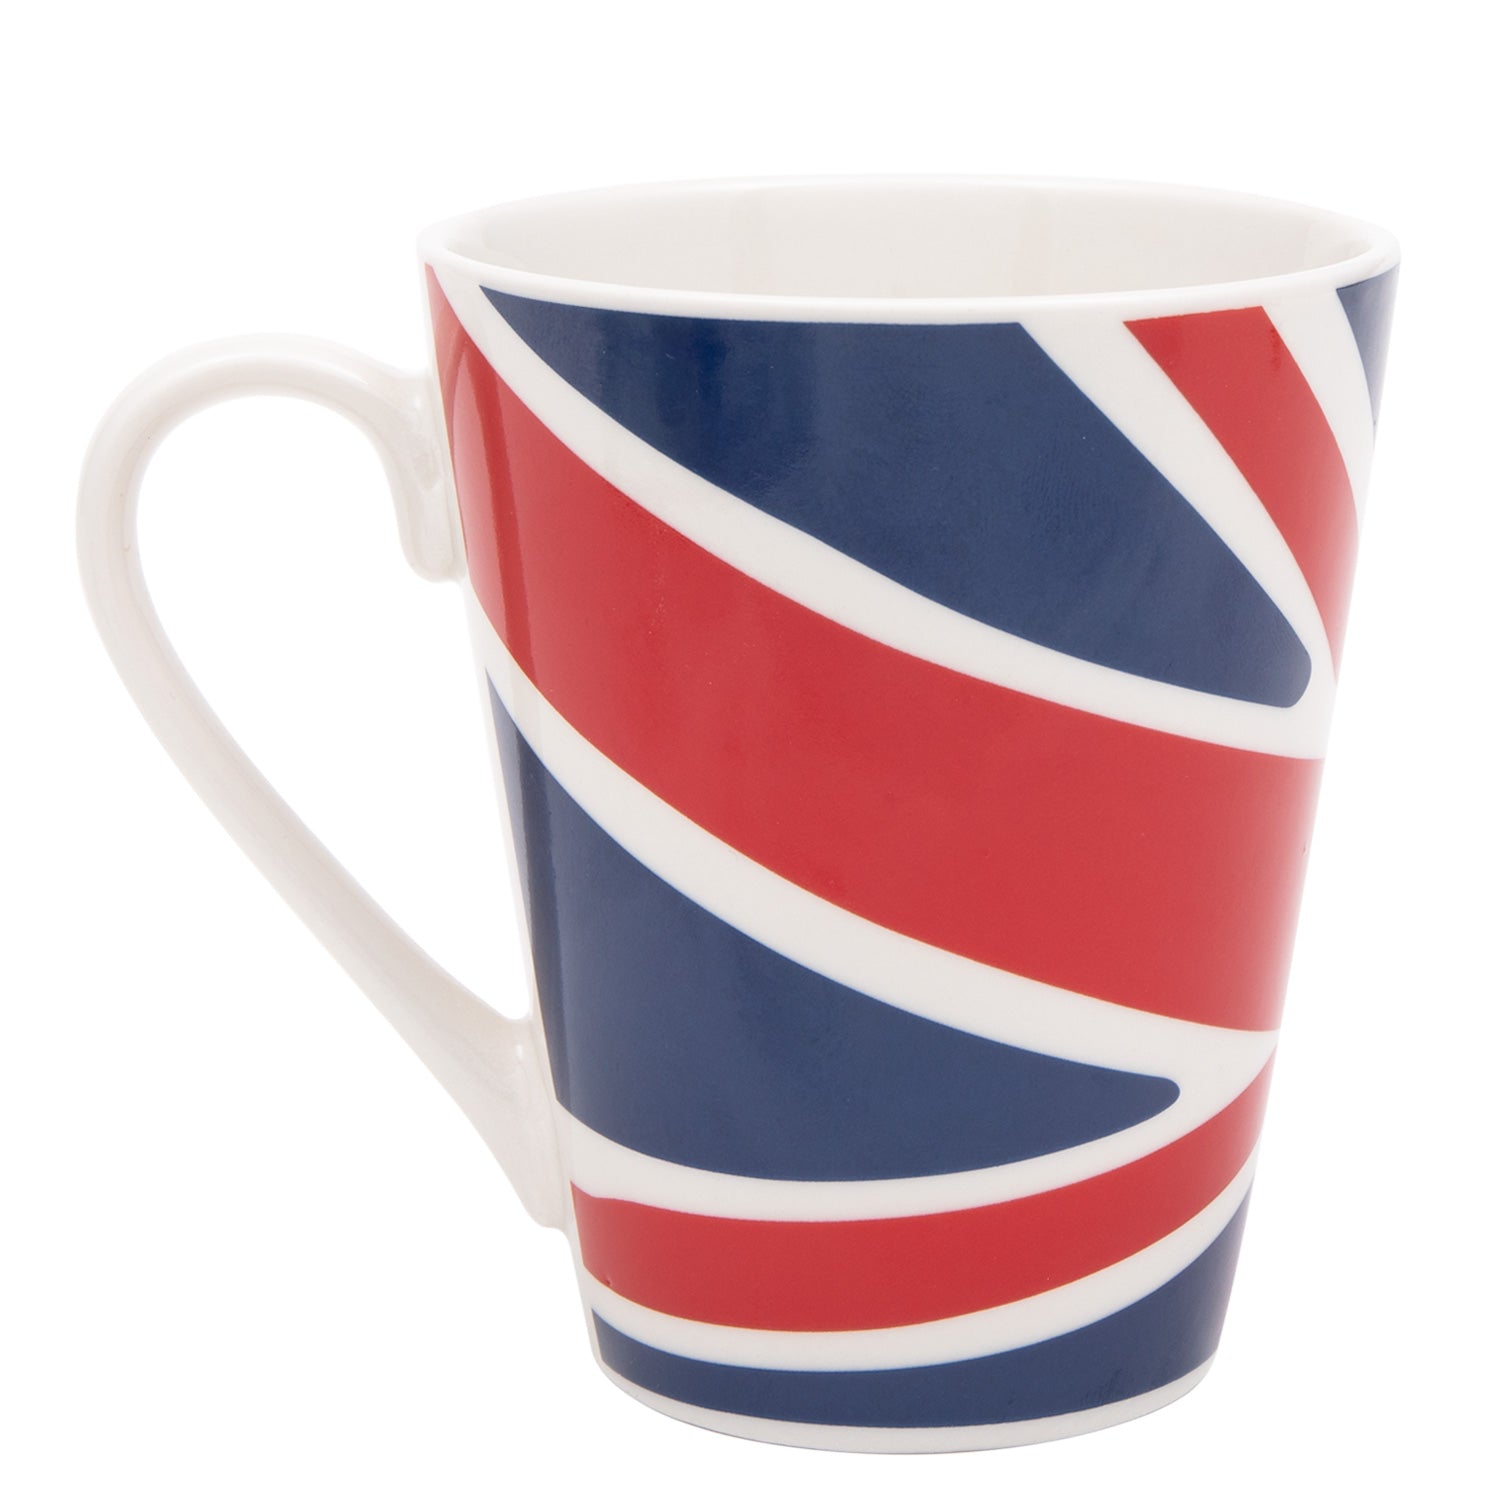 Jacks & Co Union Jack Latte Mug 2